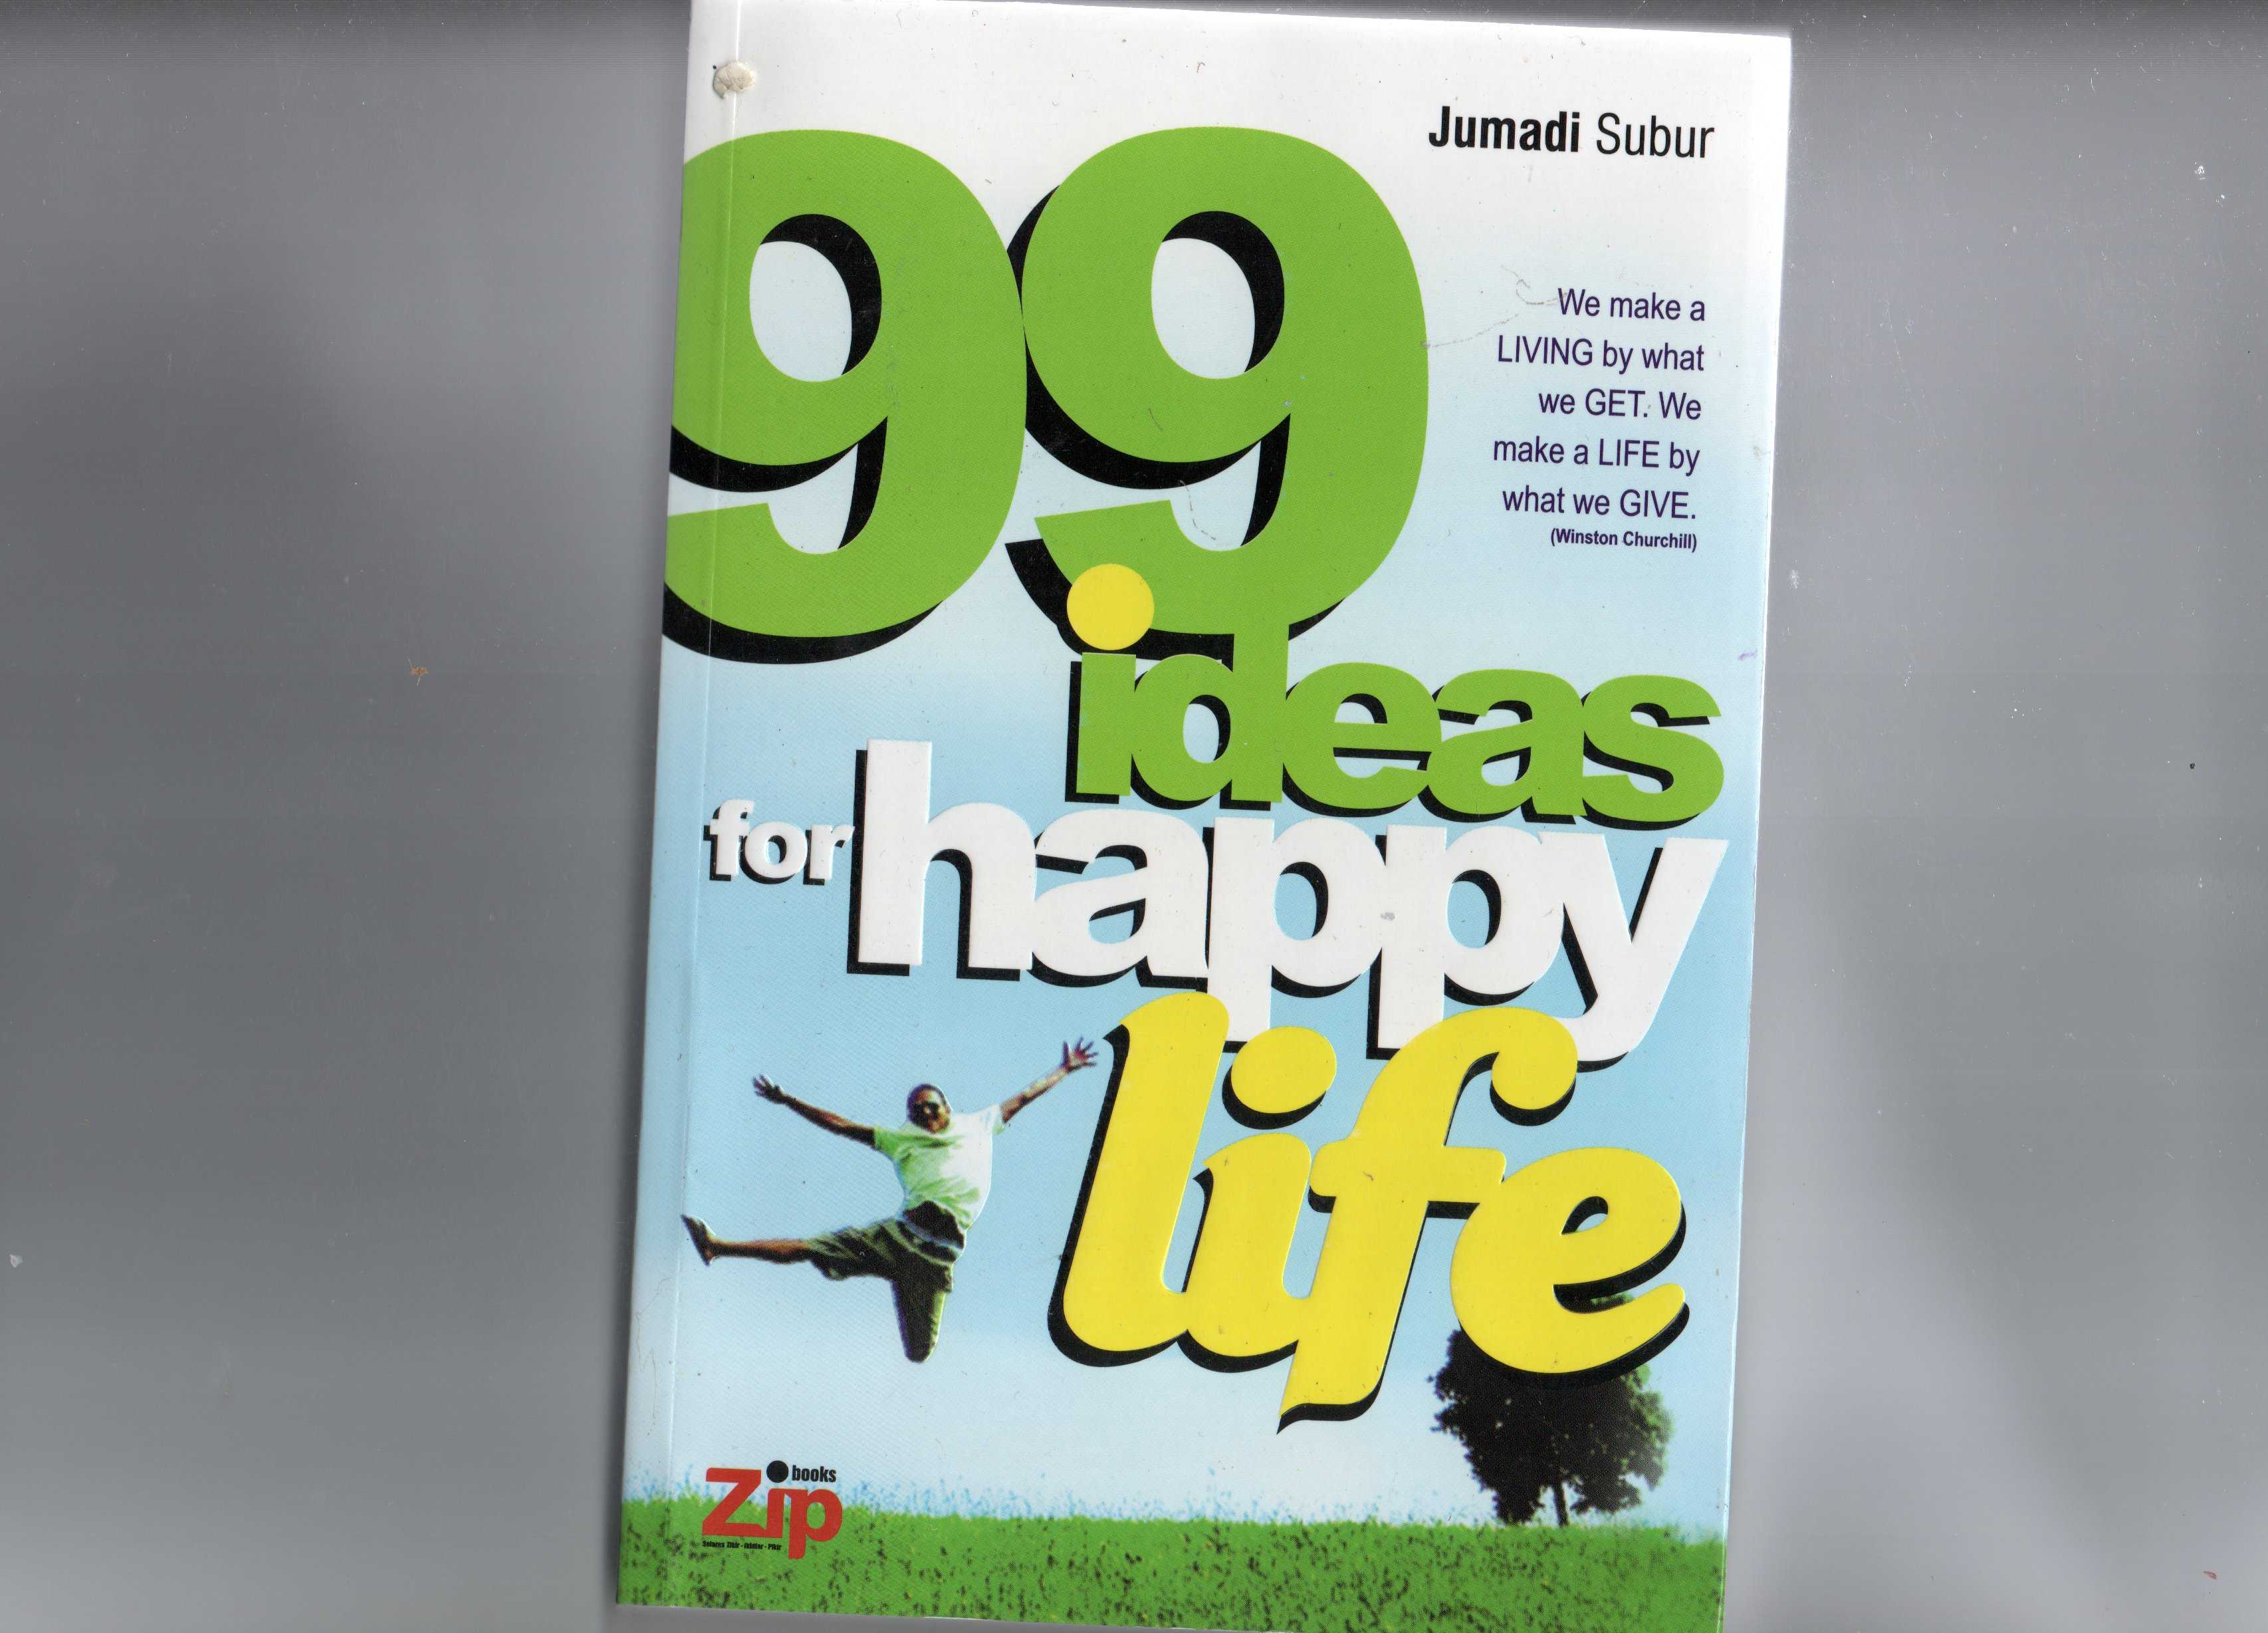 99 Ideas for Happy Life